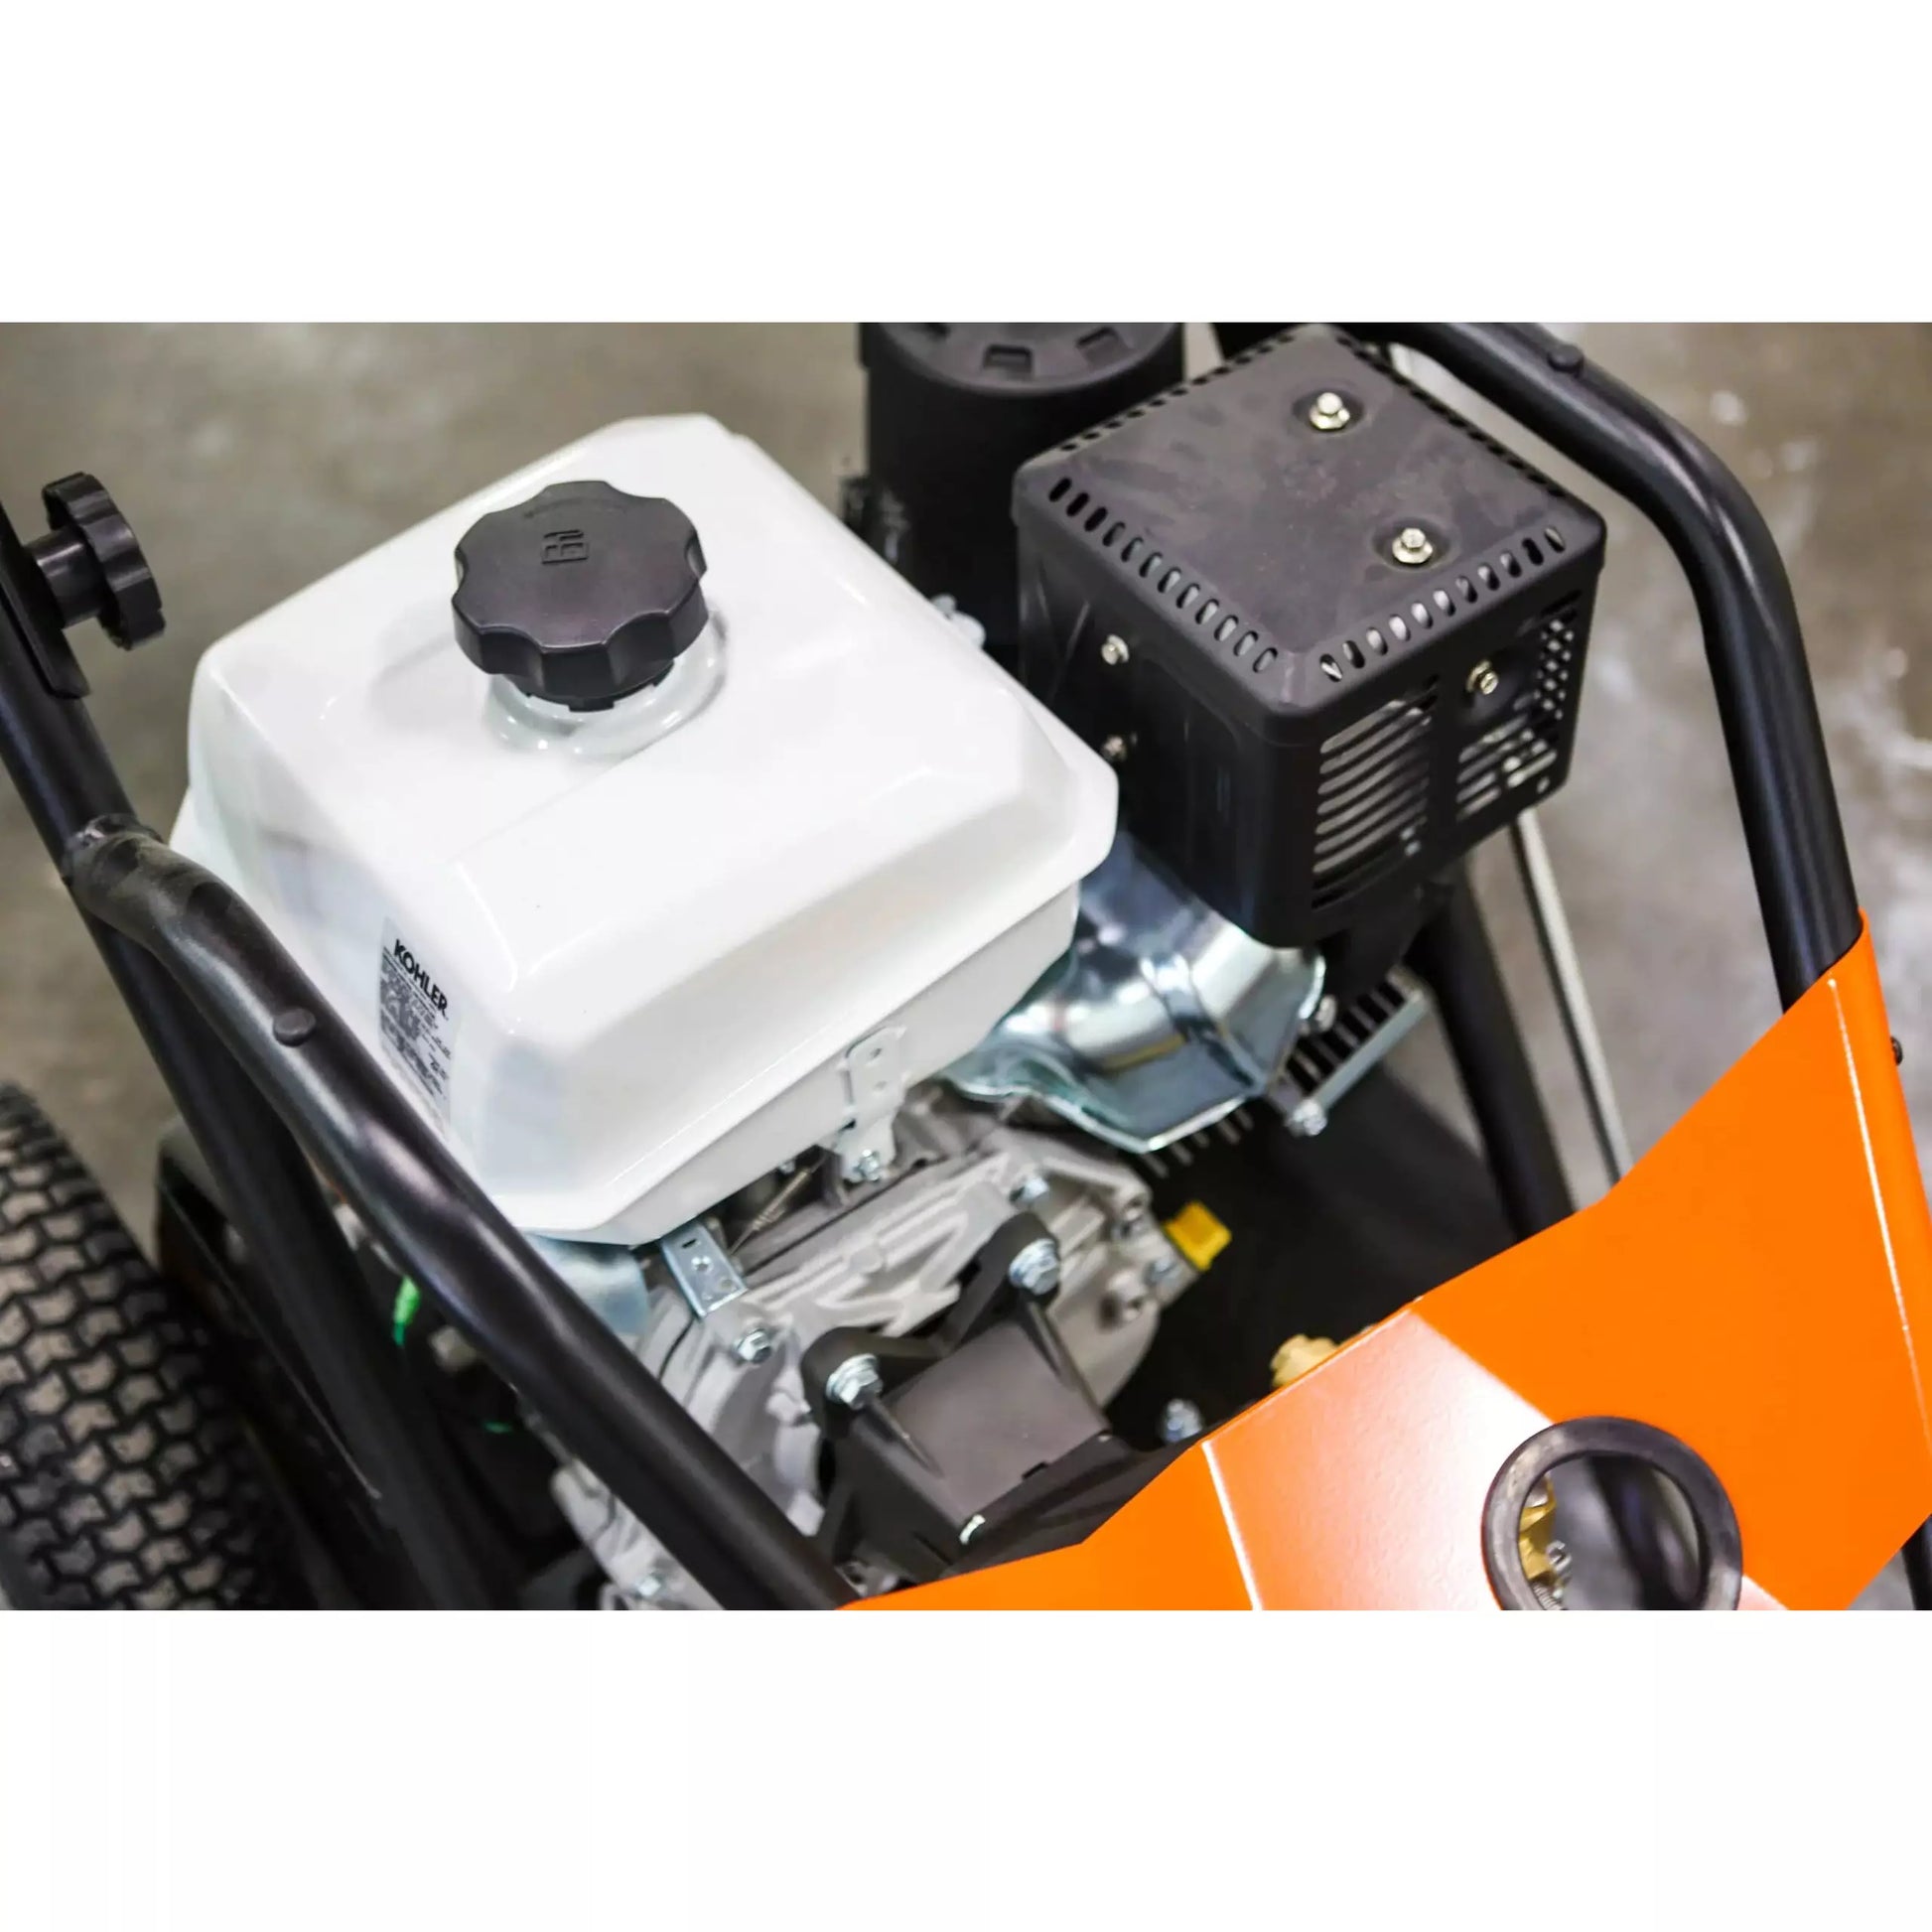 Stihl RB 800 Gas Pressure Washer 4,200 psi – Procore Power Equipment